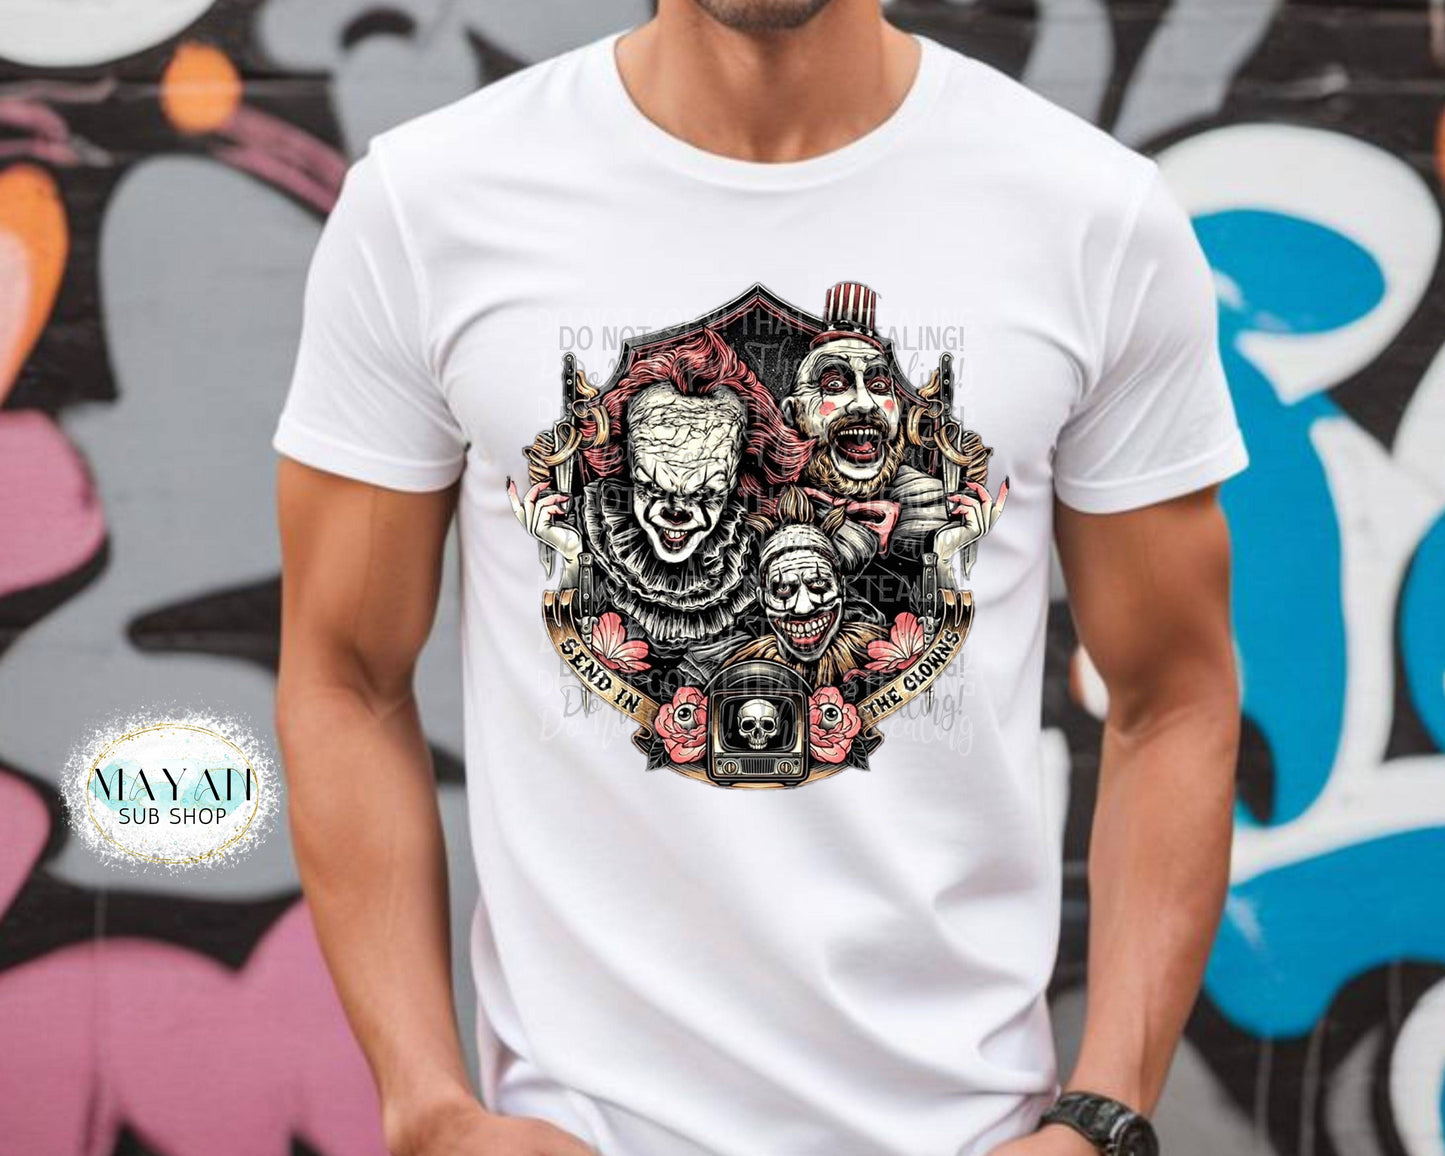 Send in the clowns shirt. -Mayan Sub Shop